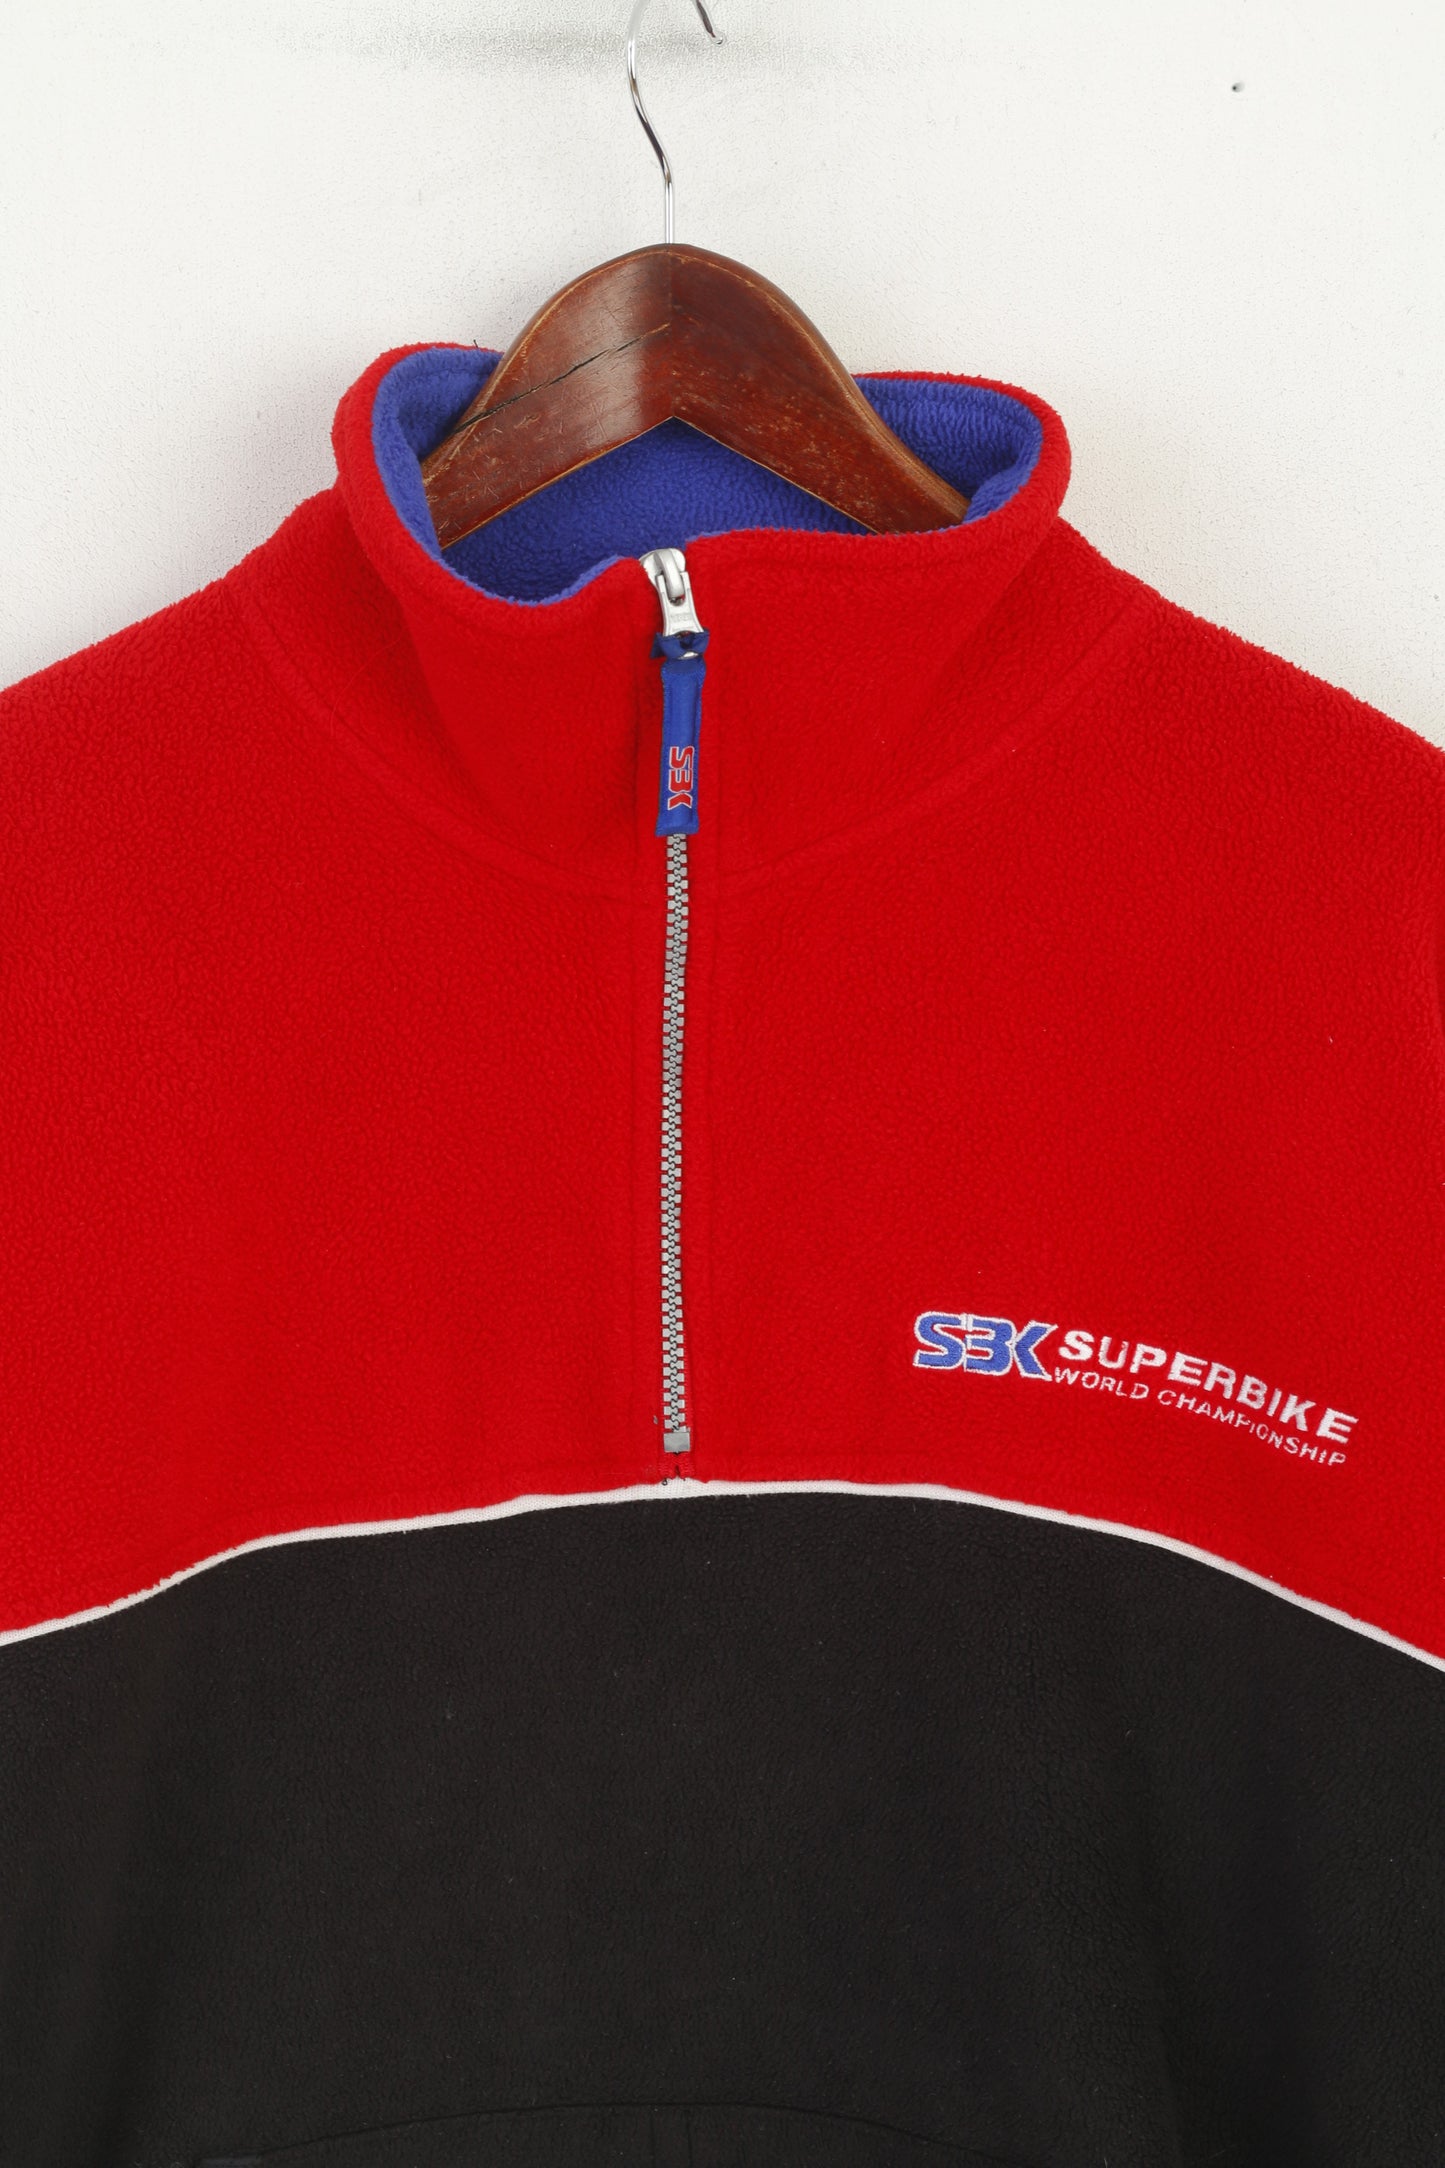 Superbike Men L Fleece Top Red Vintage SBK Zip Neck World Chempionship Sweatshirt